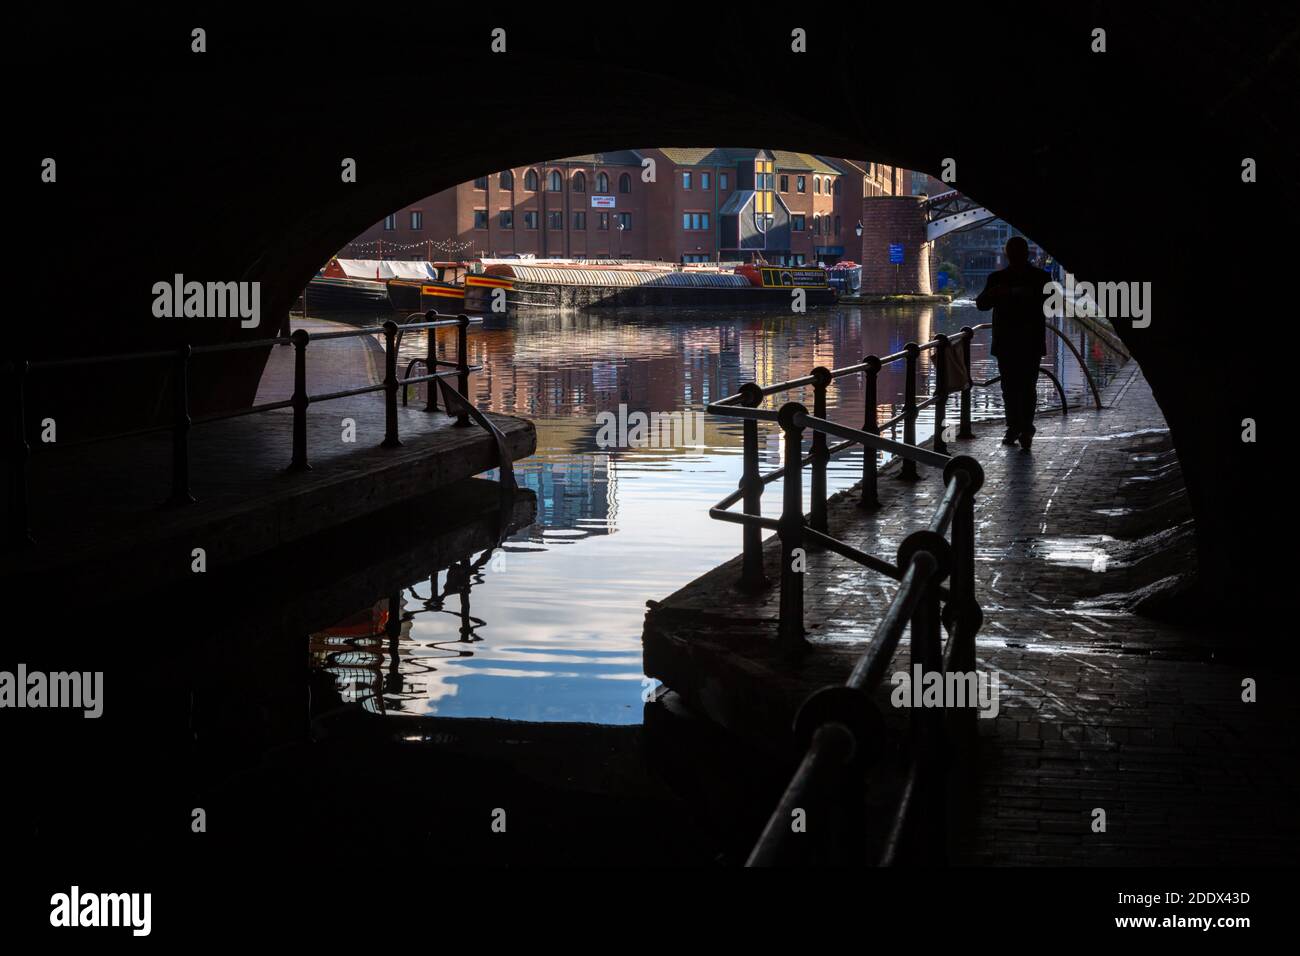 Canal in Birmingham, UK Stock Photo